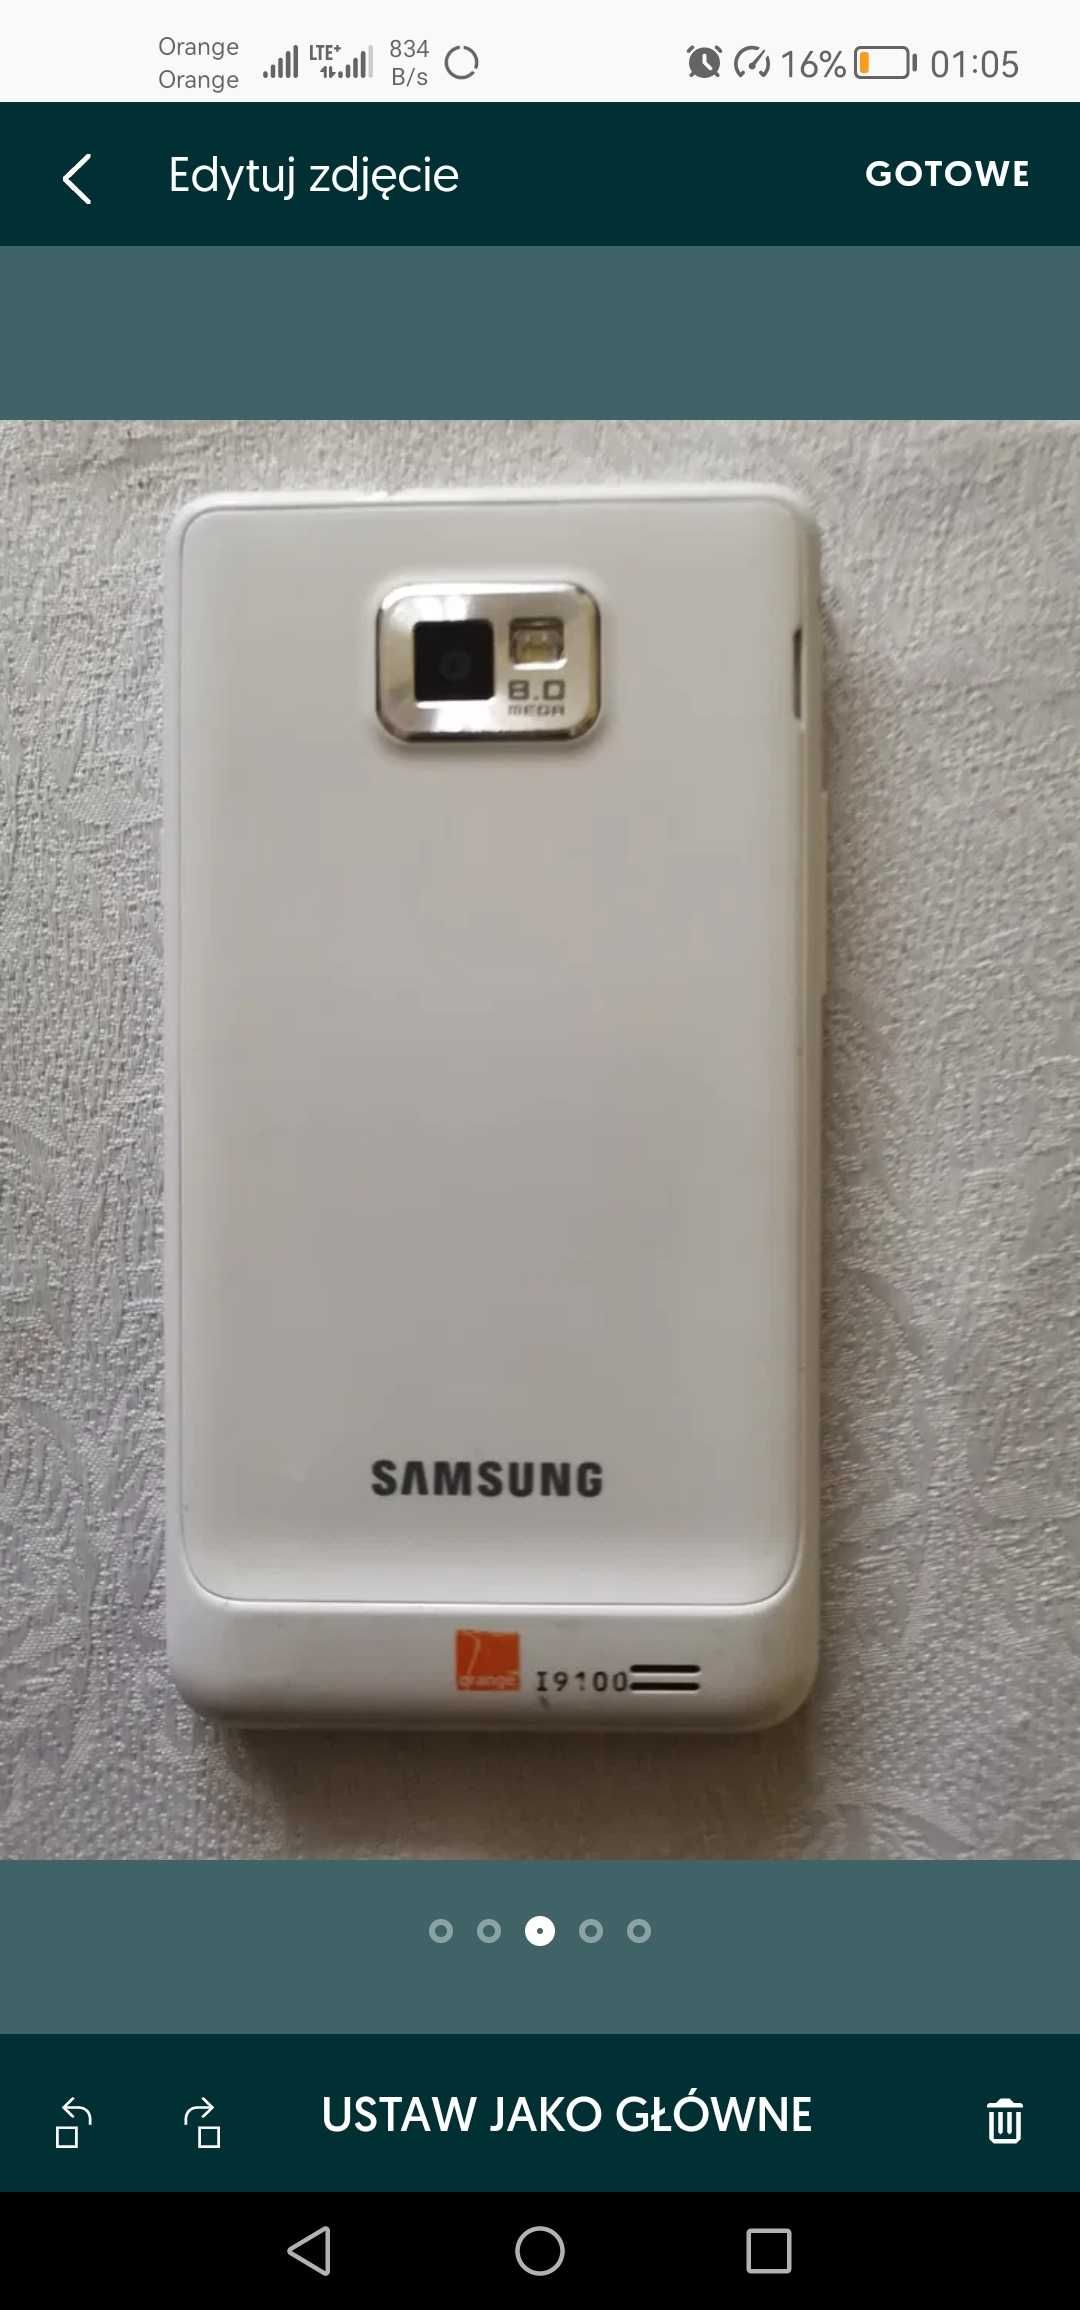 Telefon Smartfon Samsung Galaxy SII (S2).